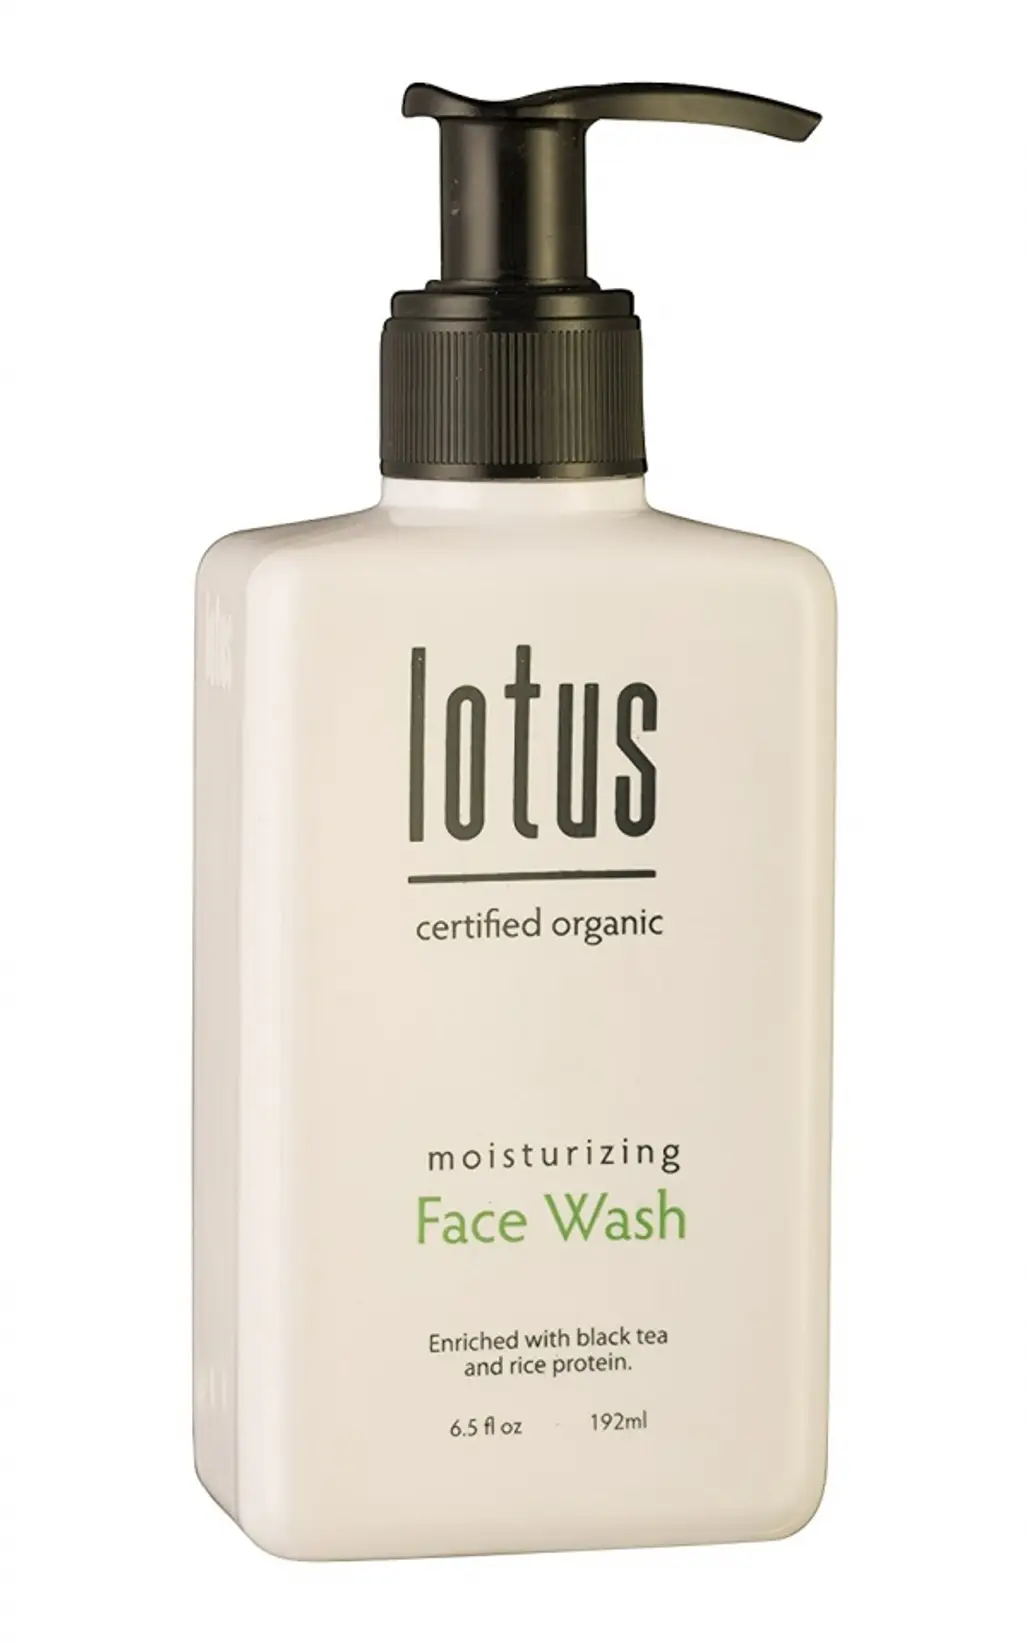 lotion,skin,product,skin care,otUS,